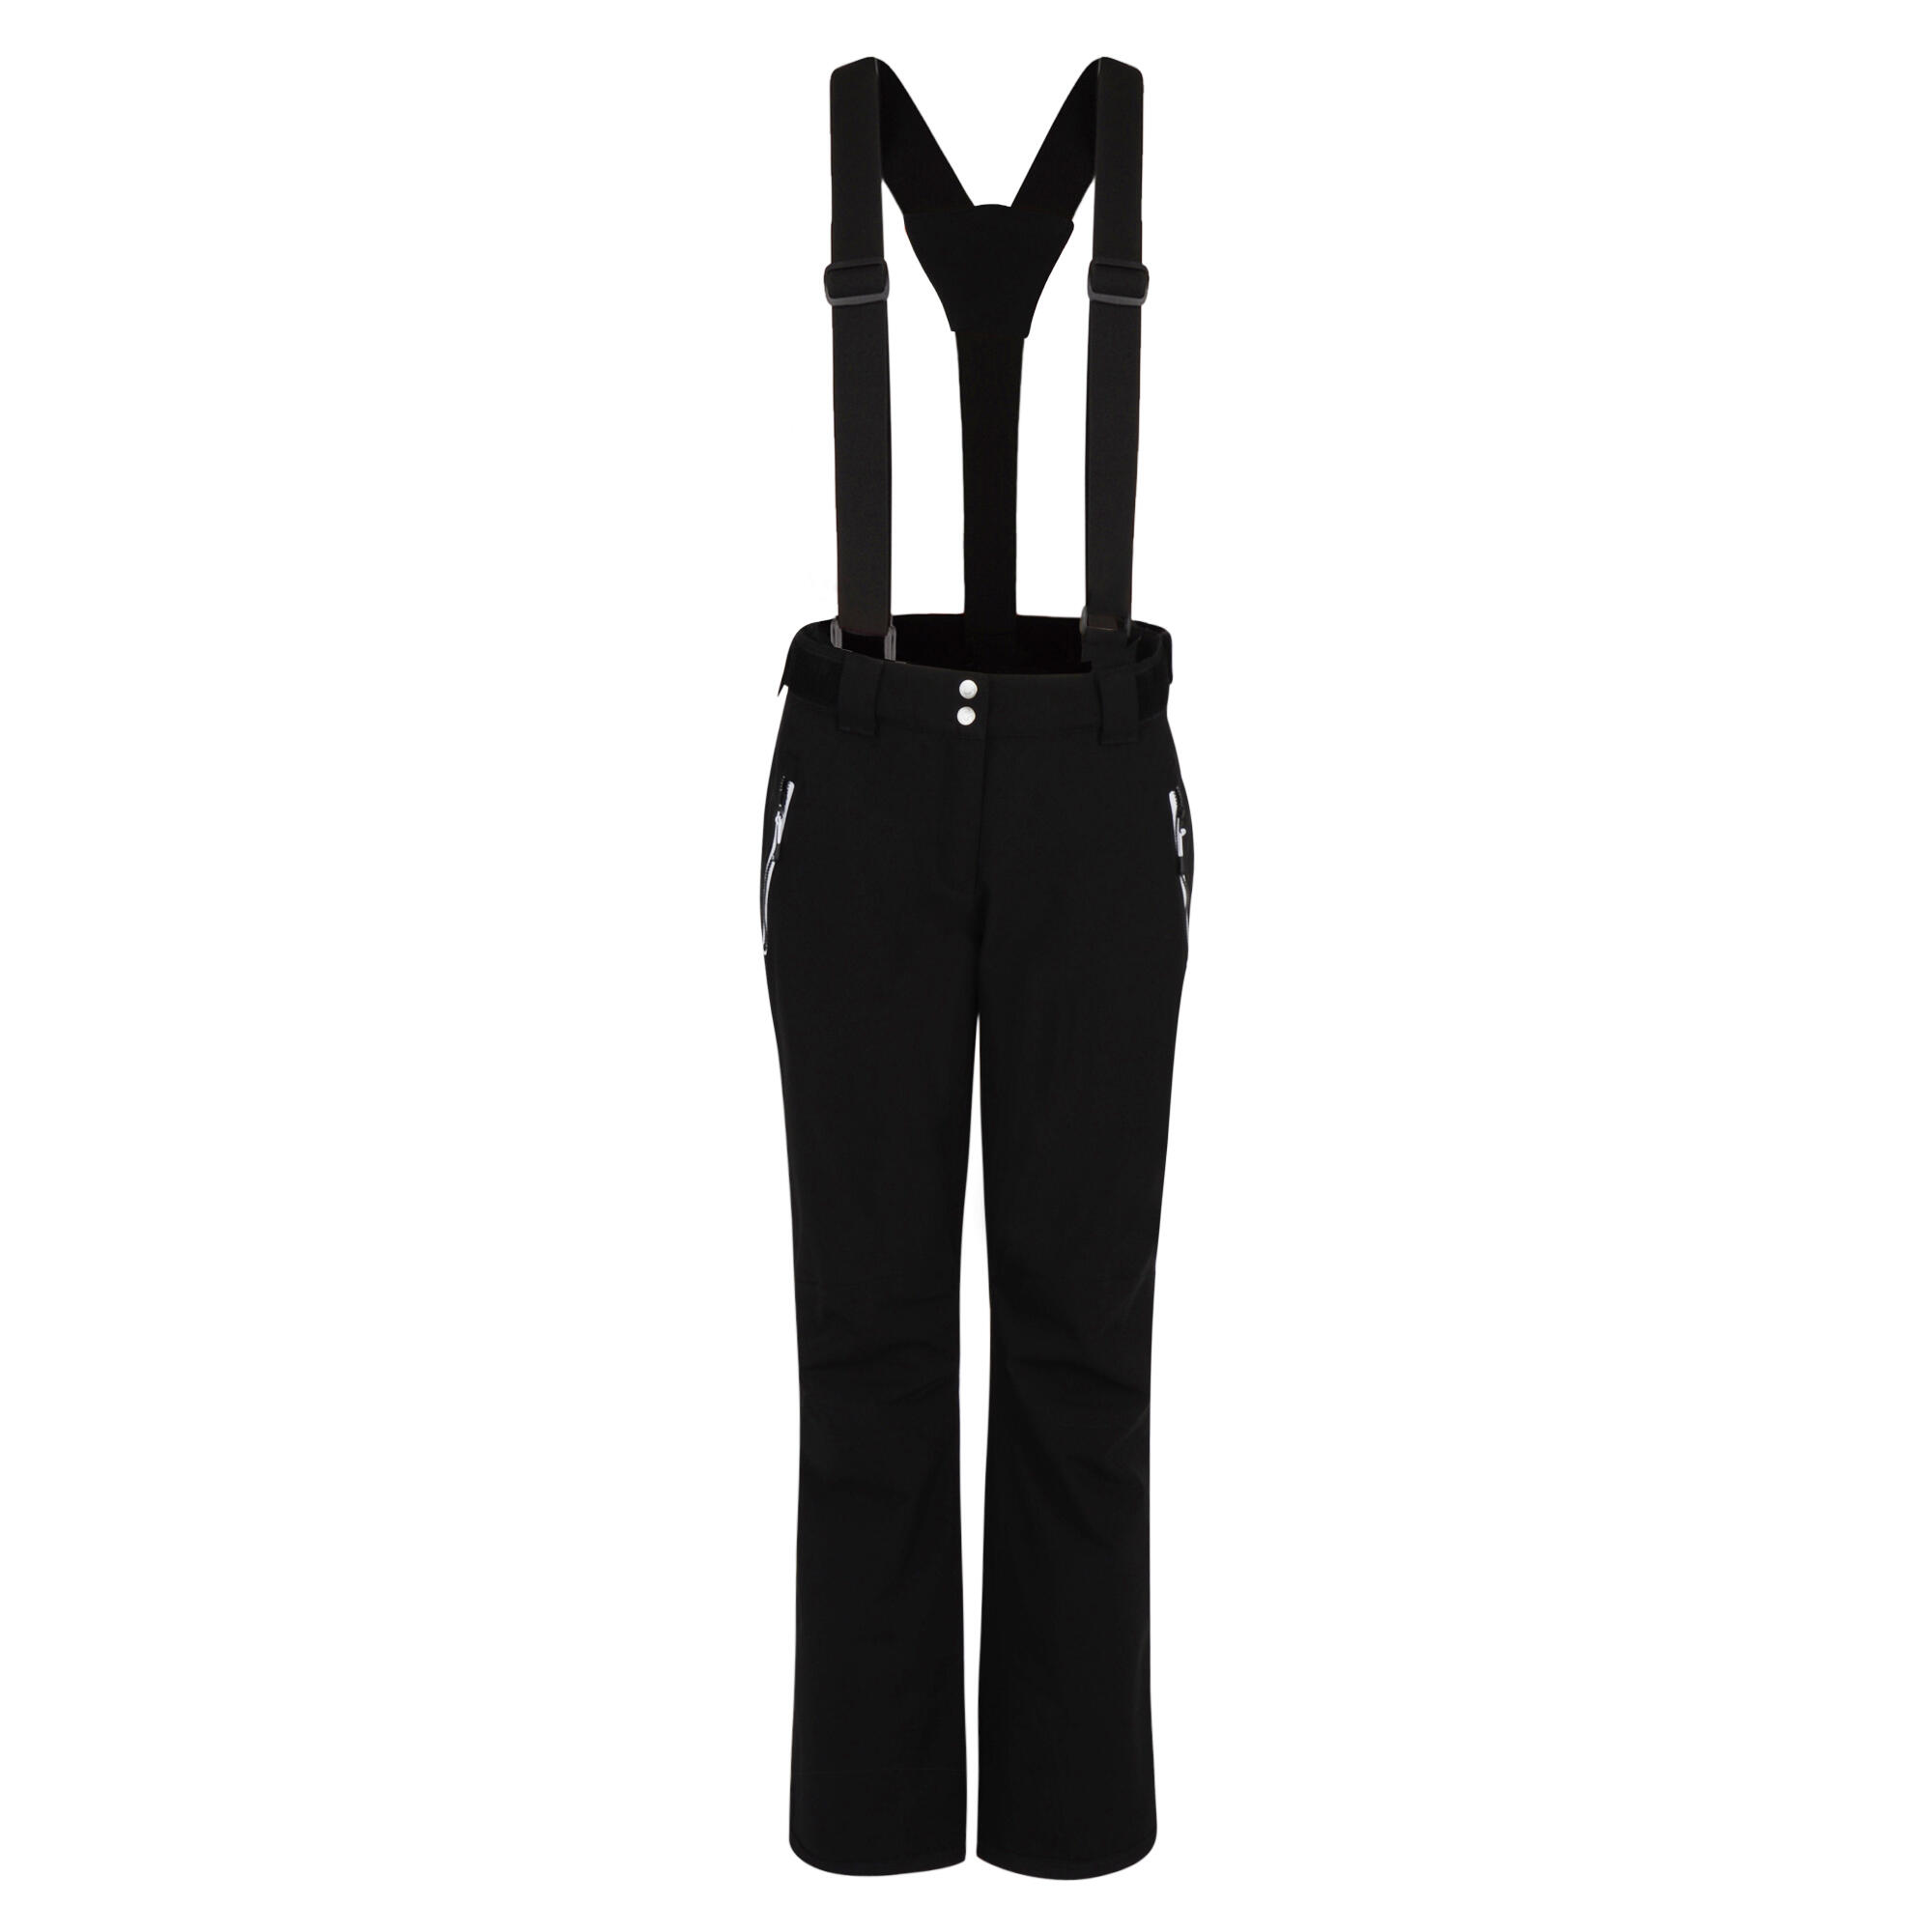 Effused Women's Ski Pants - Insulated - Black 1/5